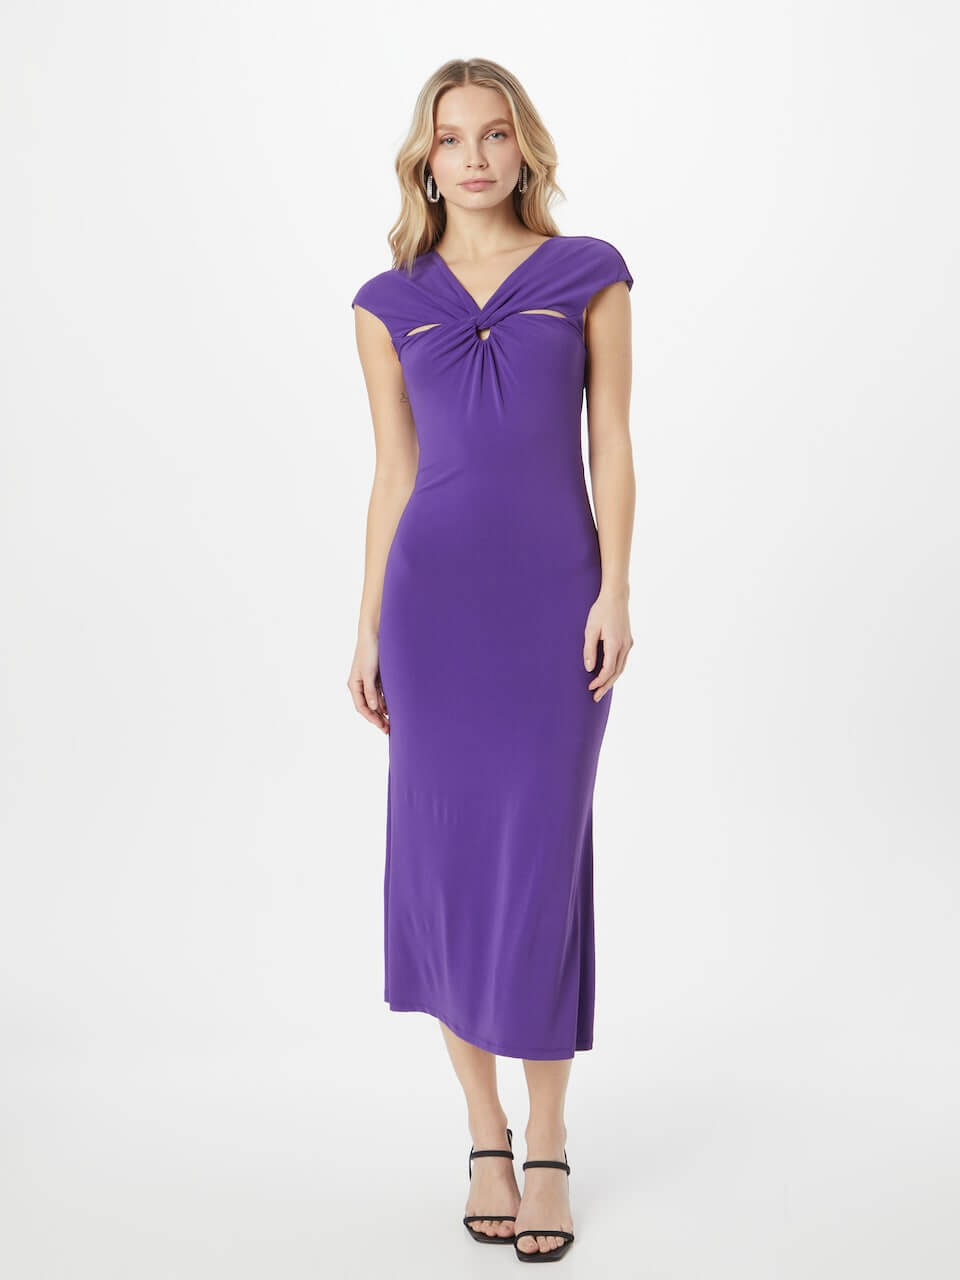 Sexy Violet Dress